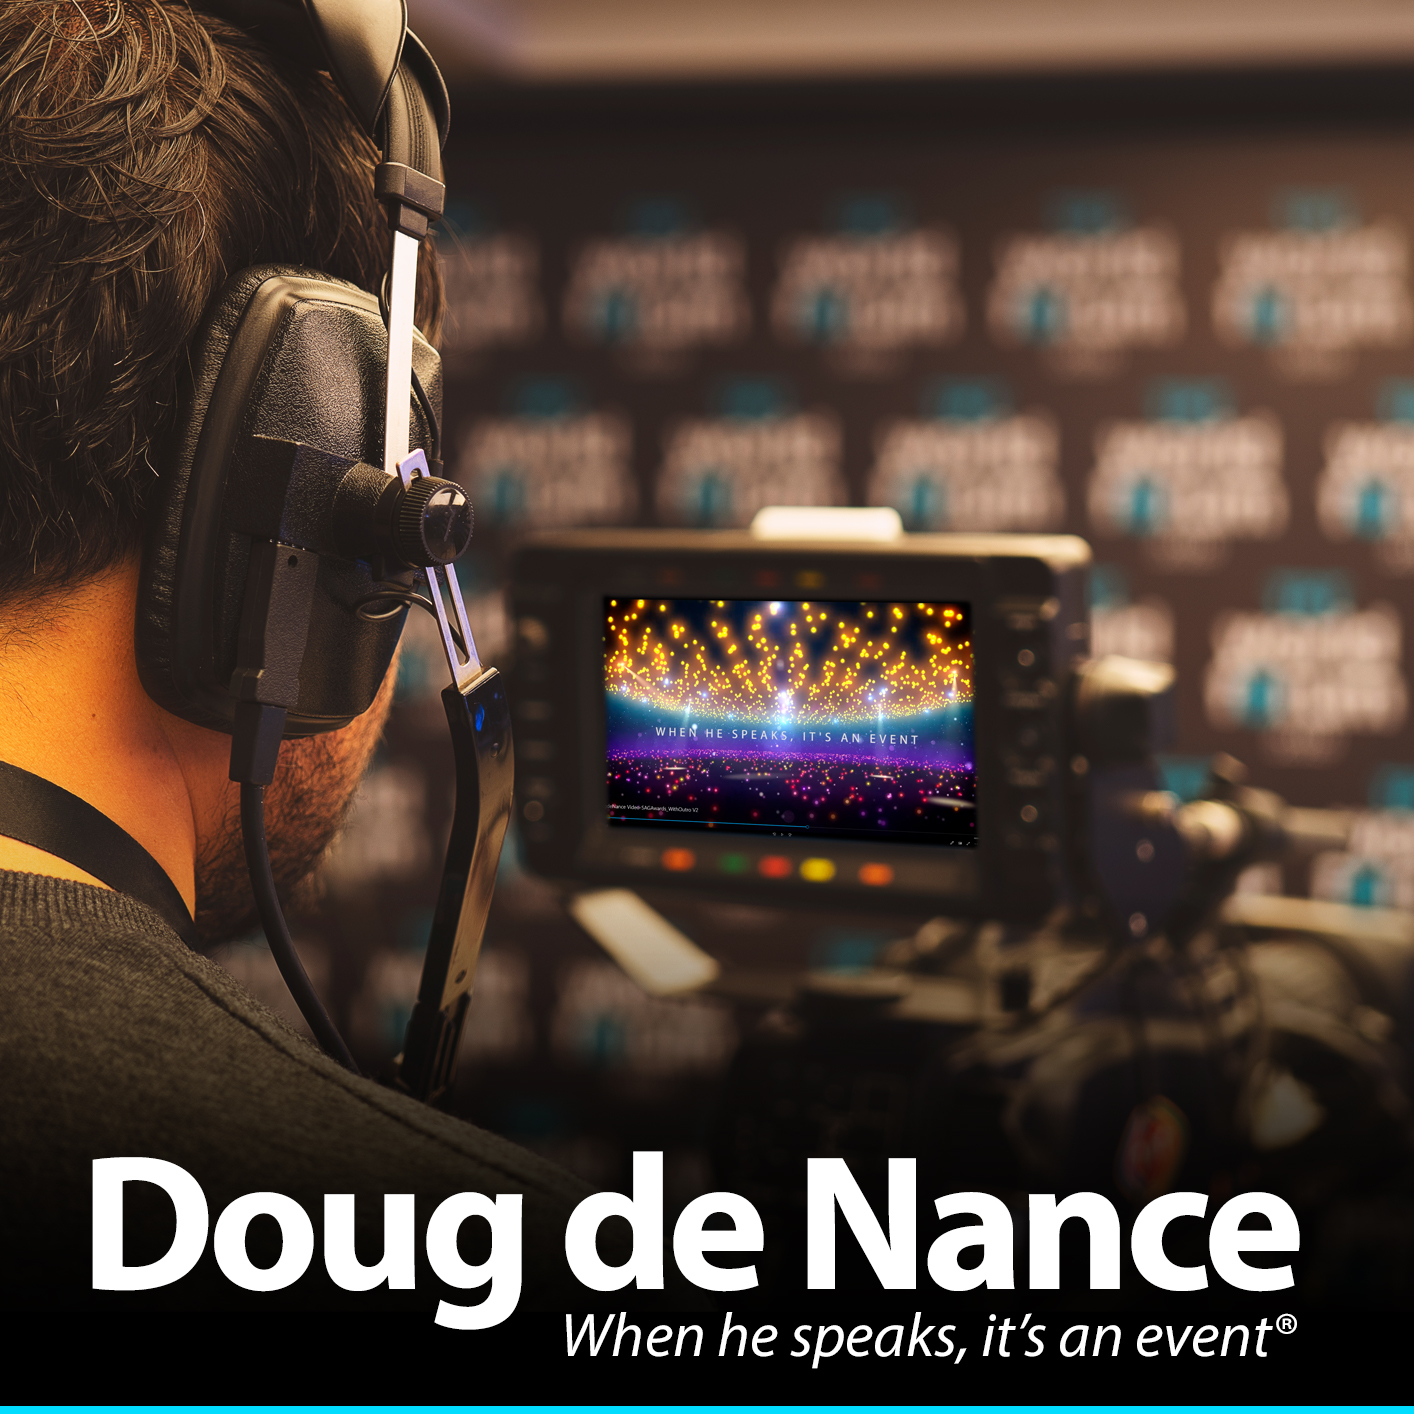 Doug de Nance: calling all video producers